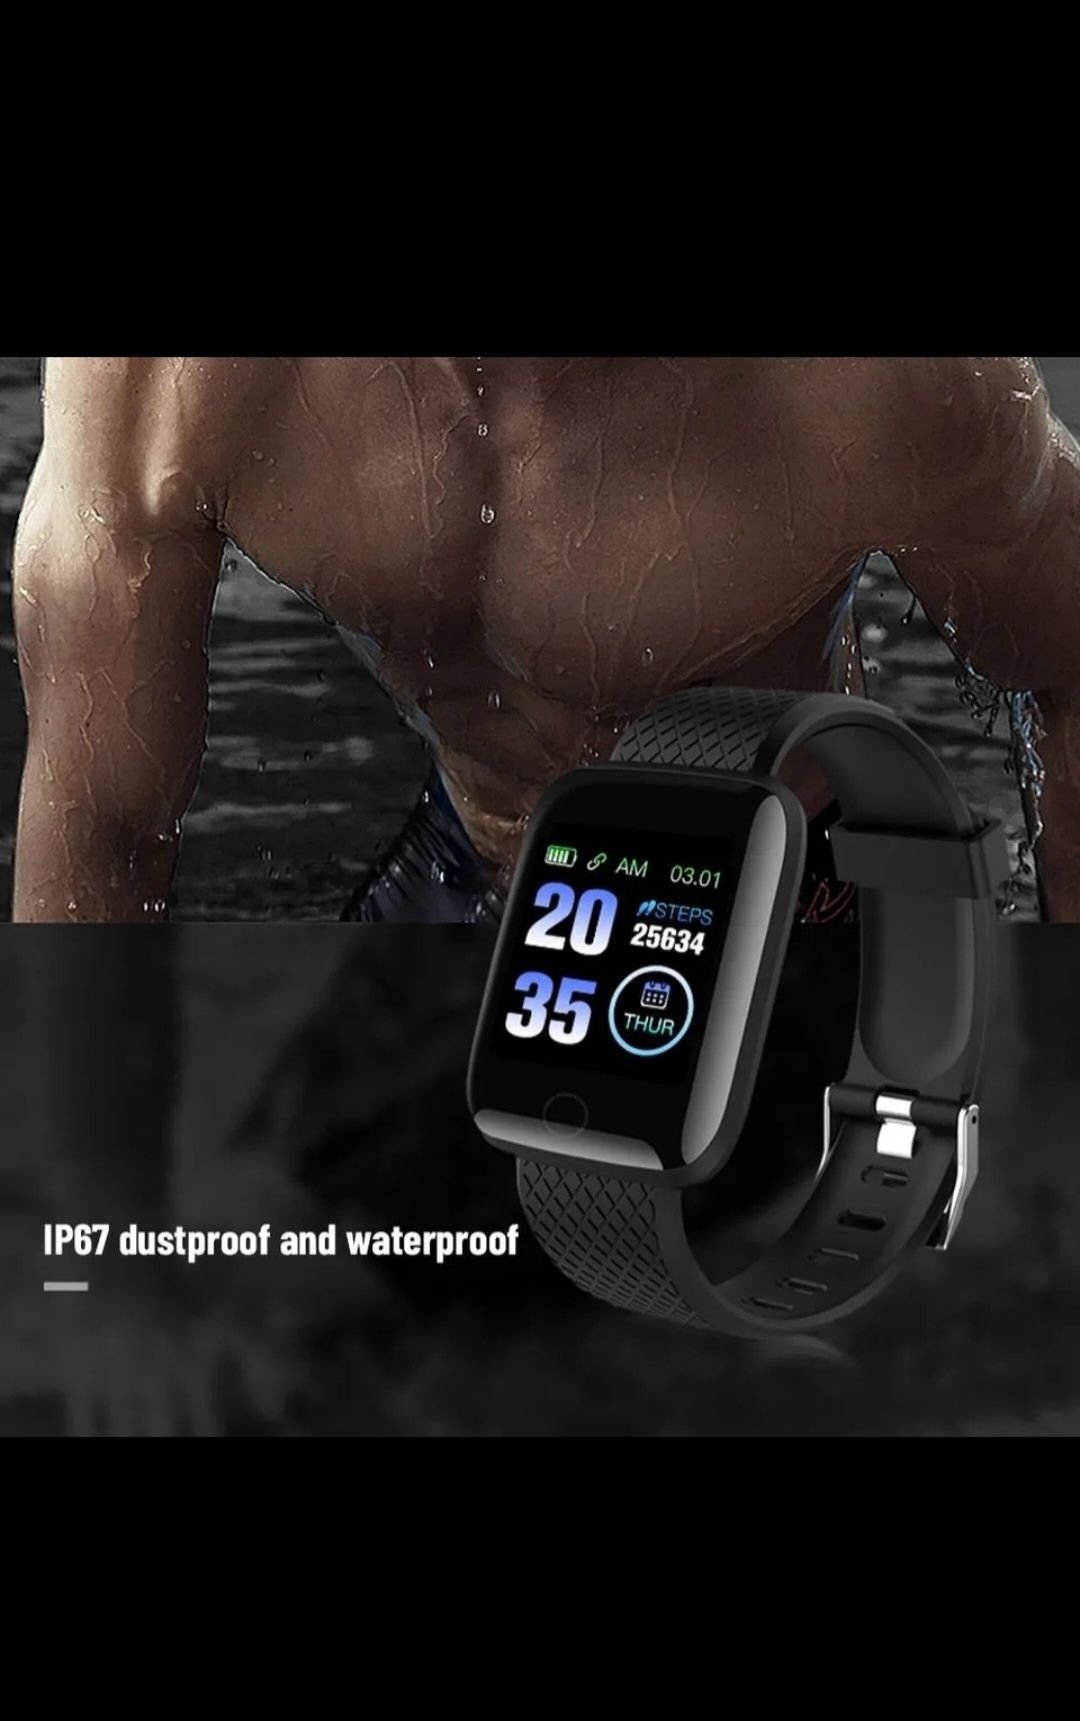 Смарт Часовник /Smart Watch I7 Pro Max